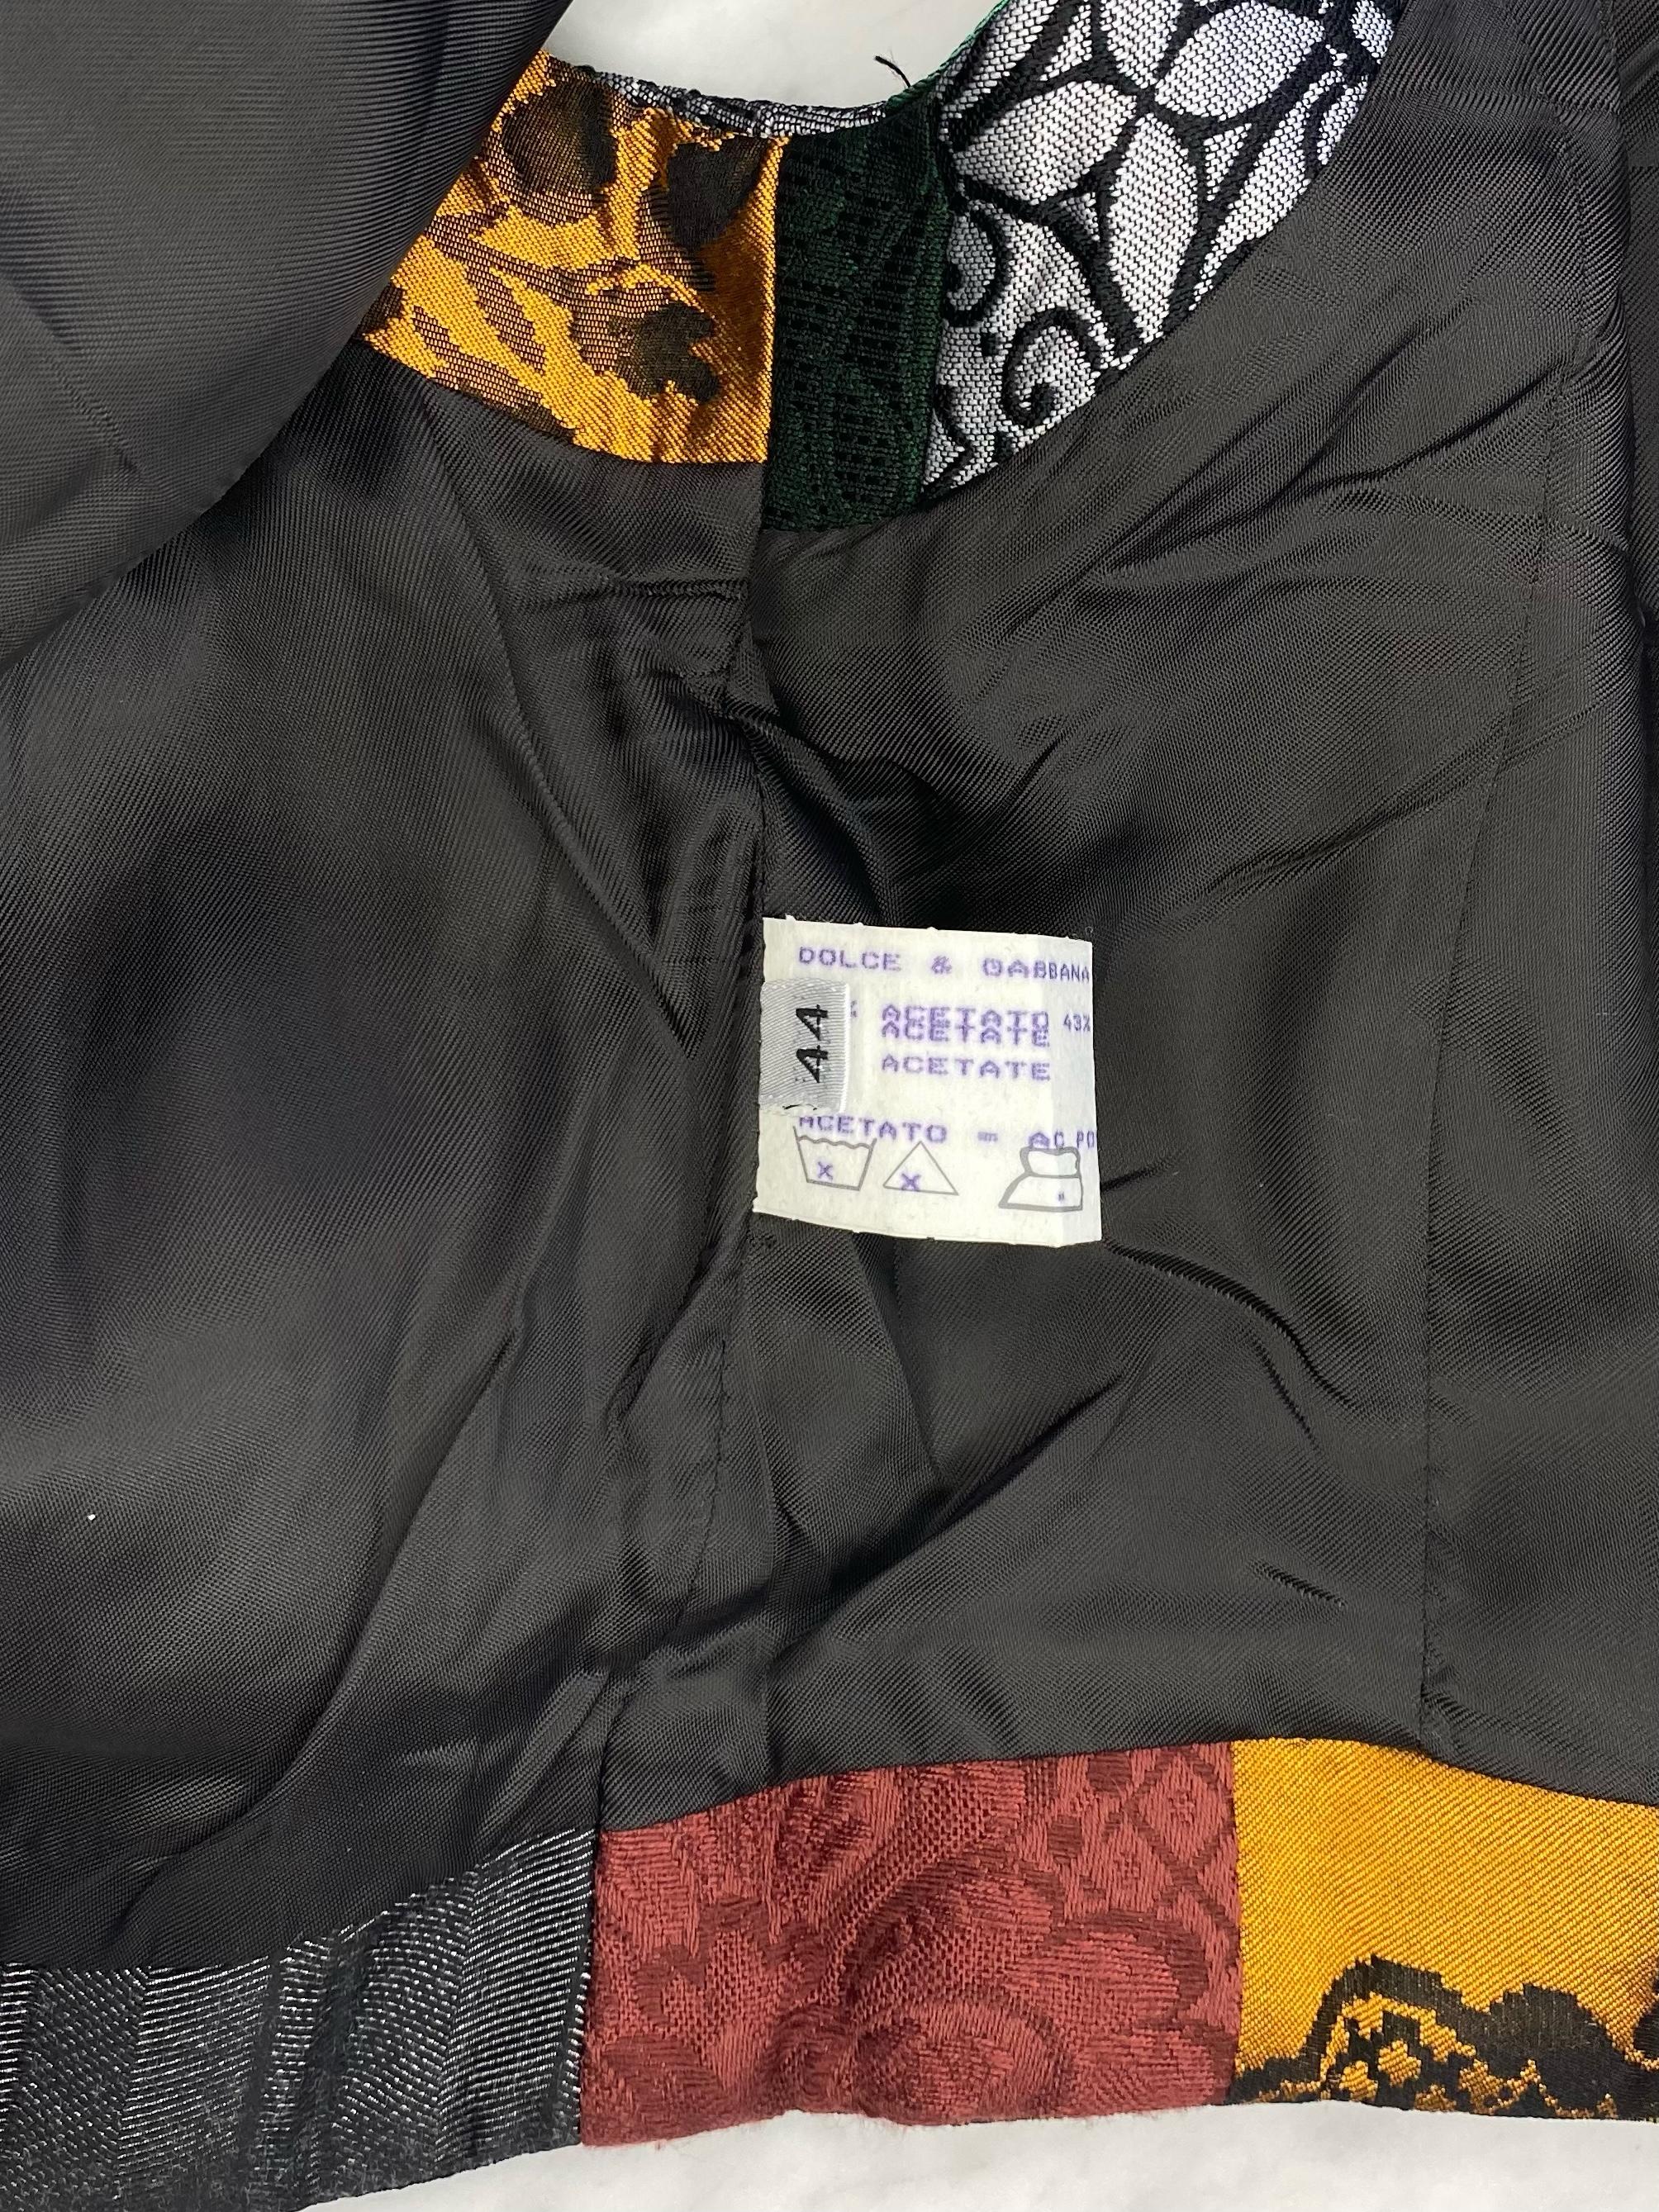 S/S 1993 Dolce & Gabbana Patchwork Button Up Bohemian Vest  For Sale 2